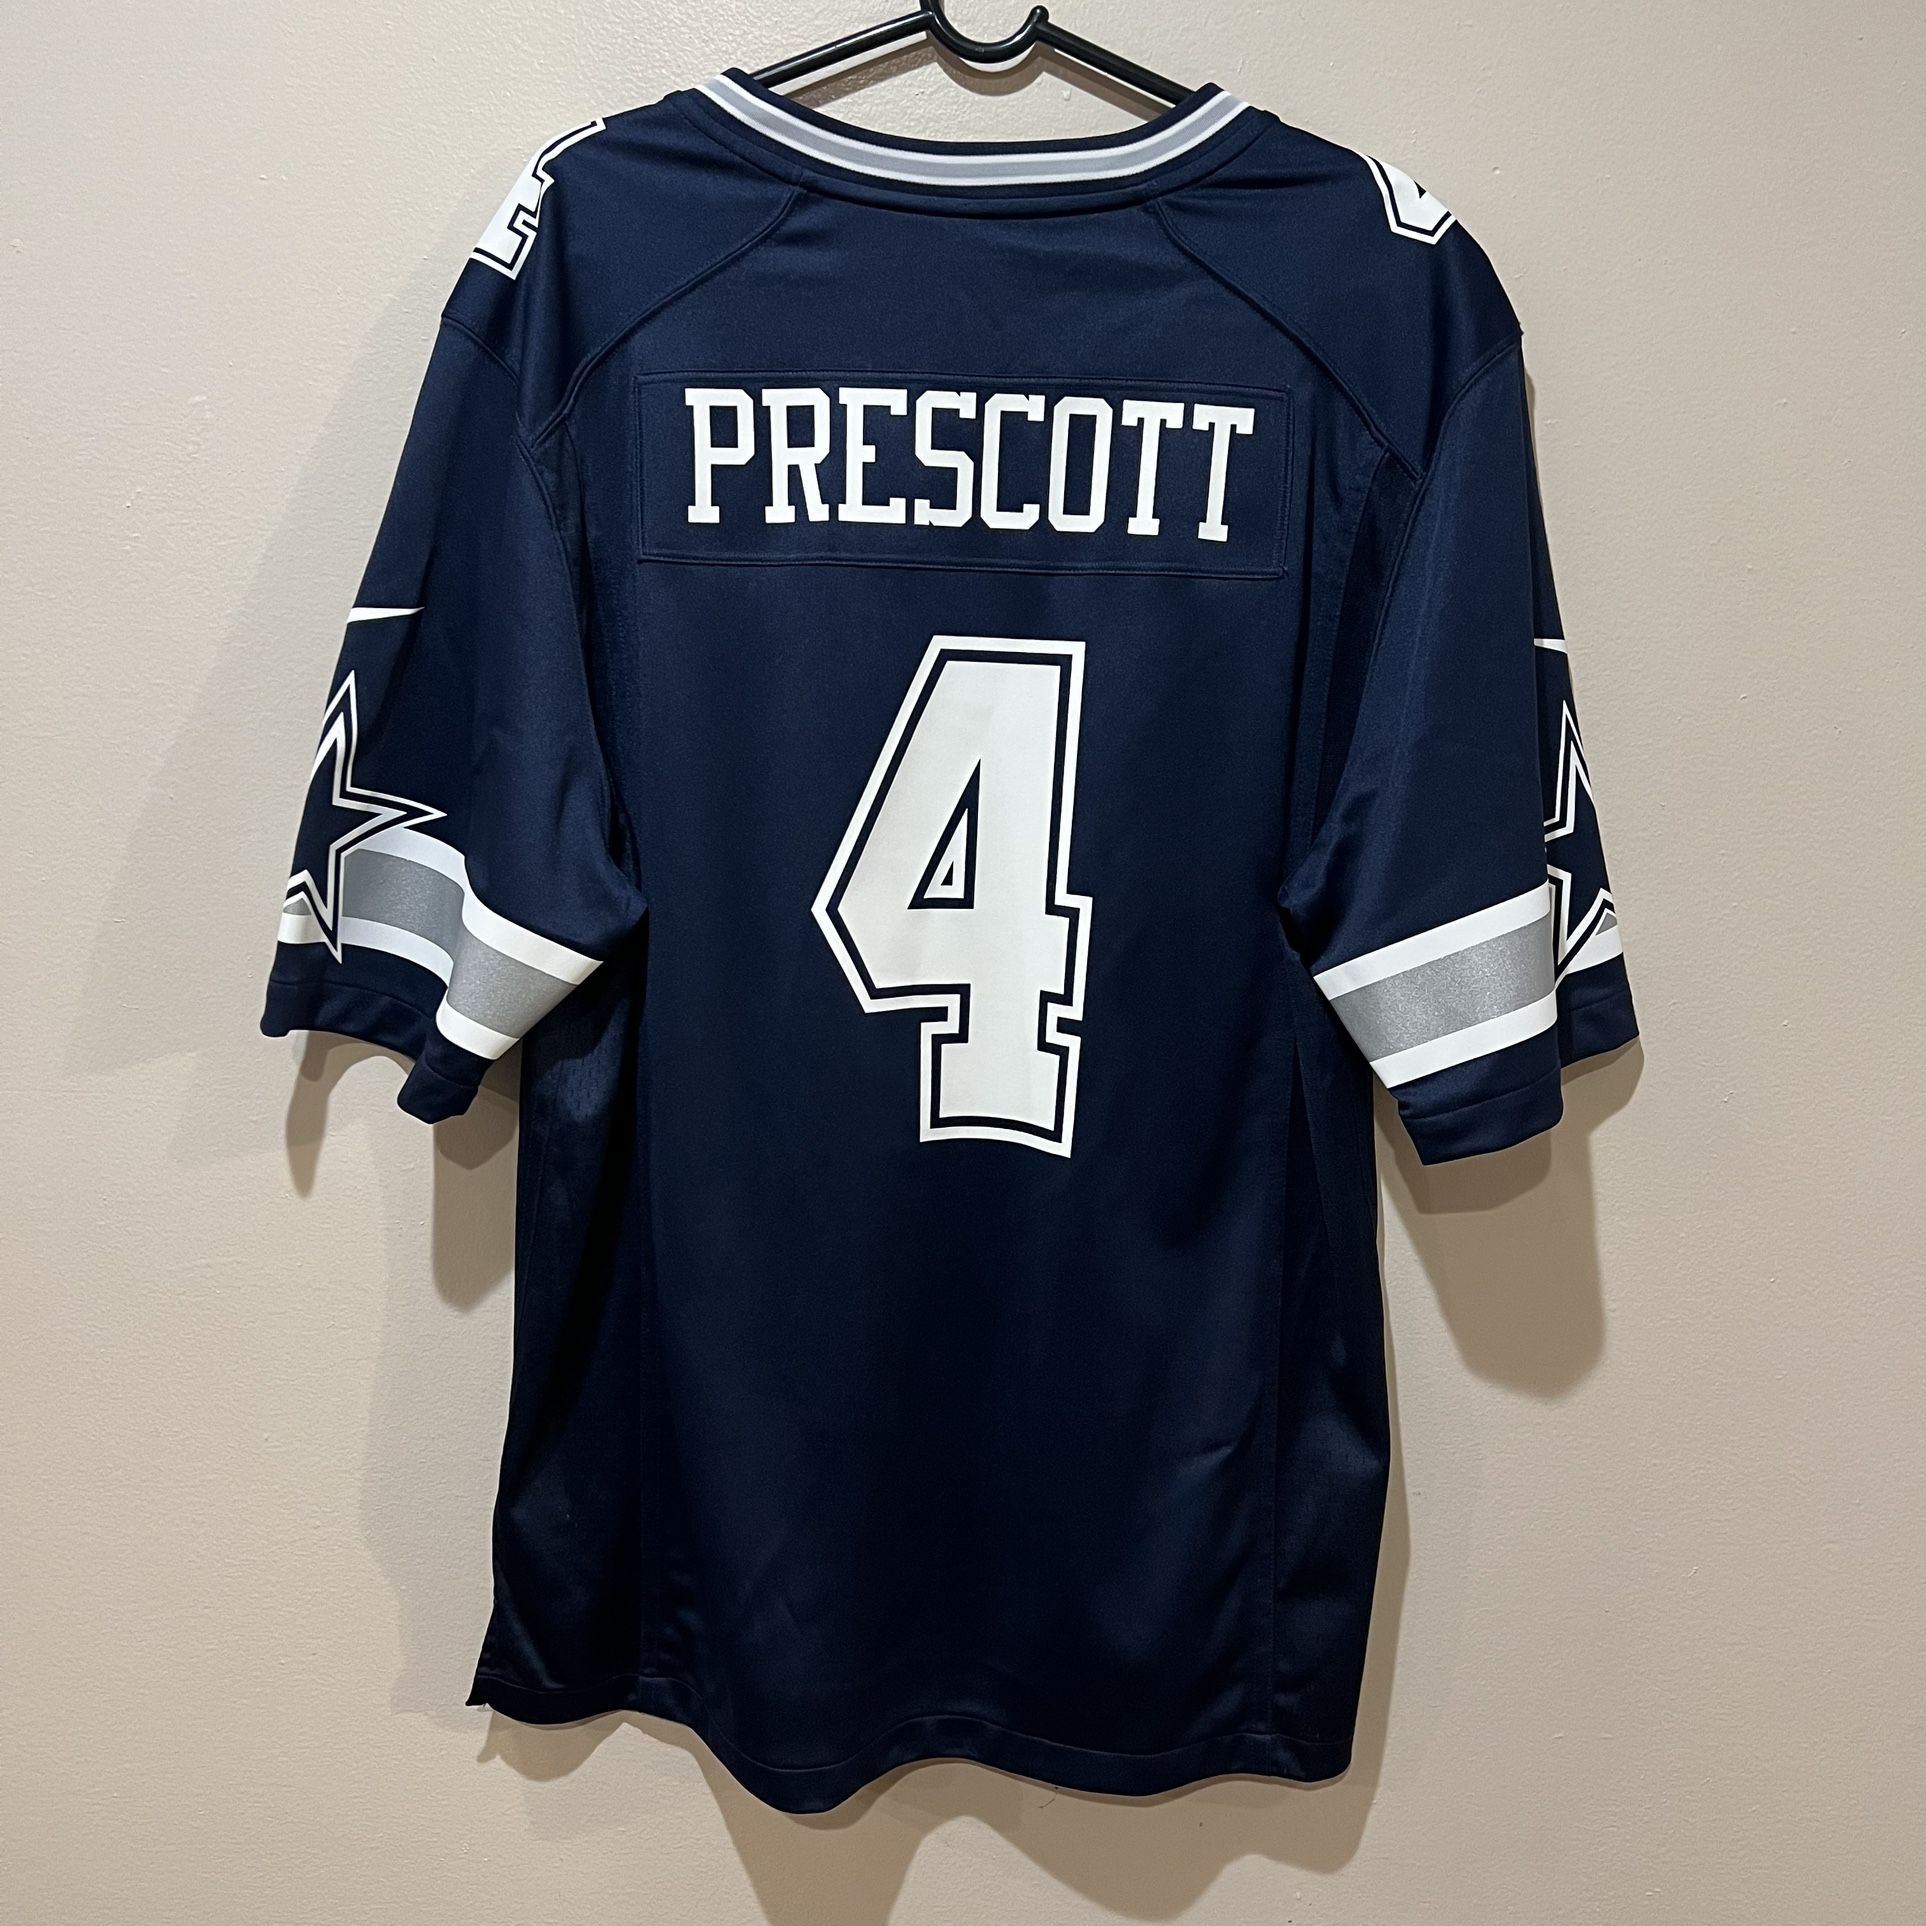 Nike Men's Home Limited Jersey Dallas Cowboys Dak Prescott #4 Size L